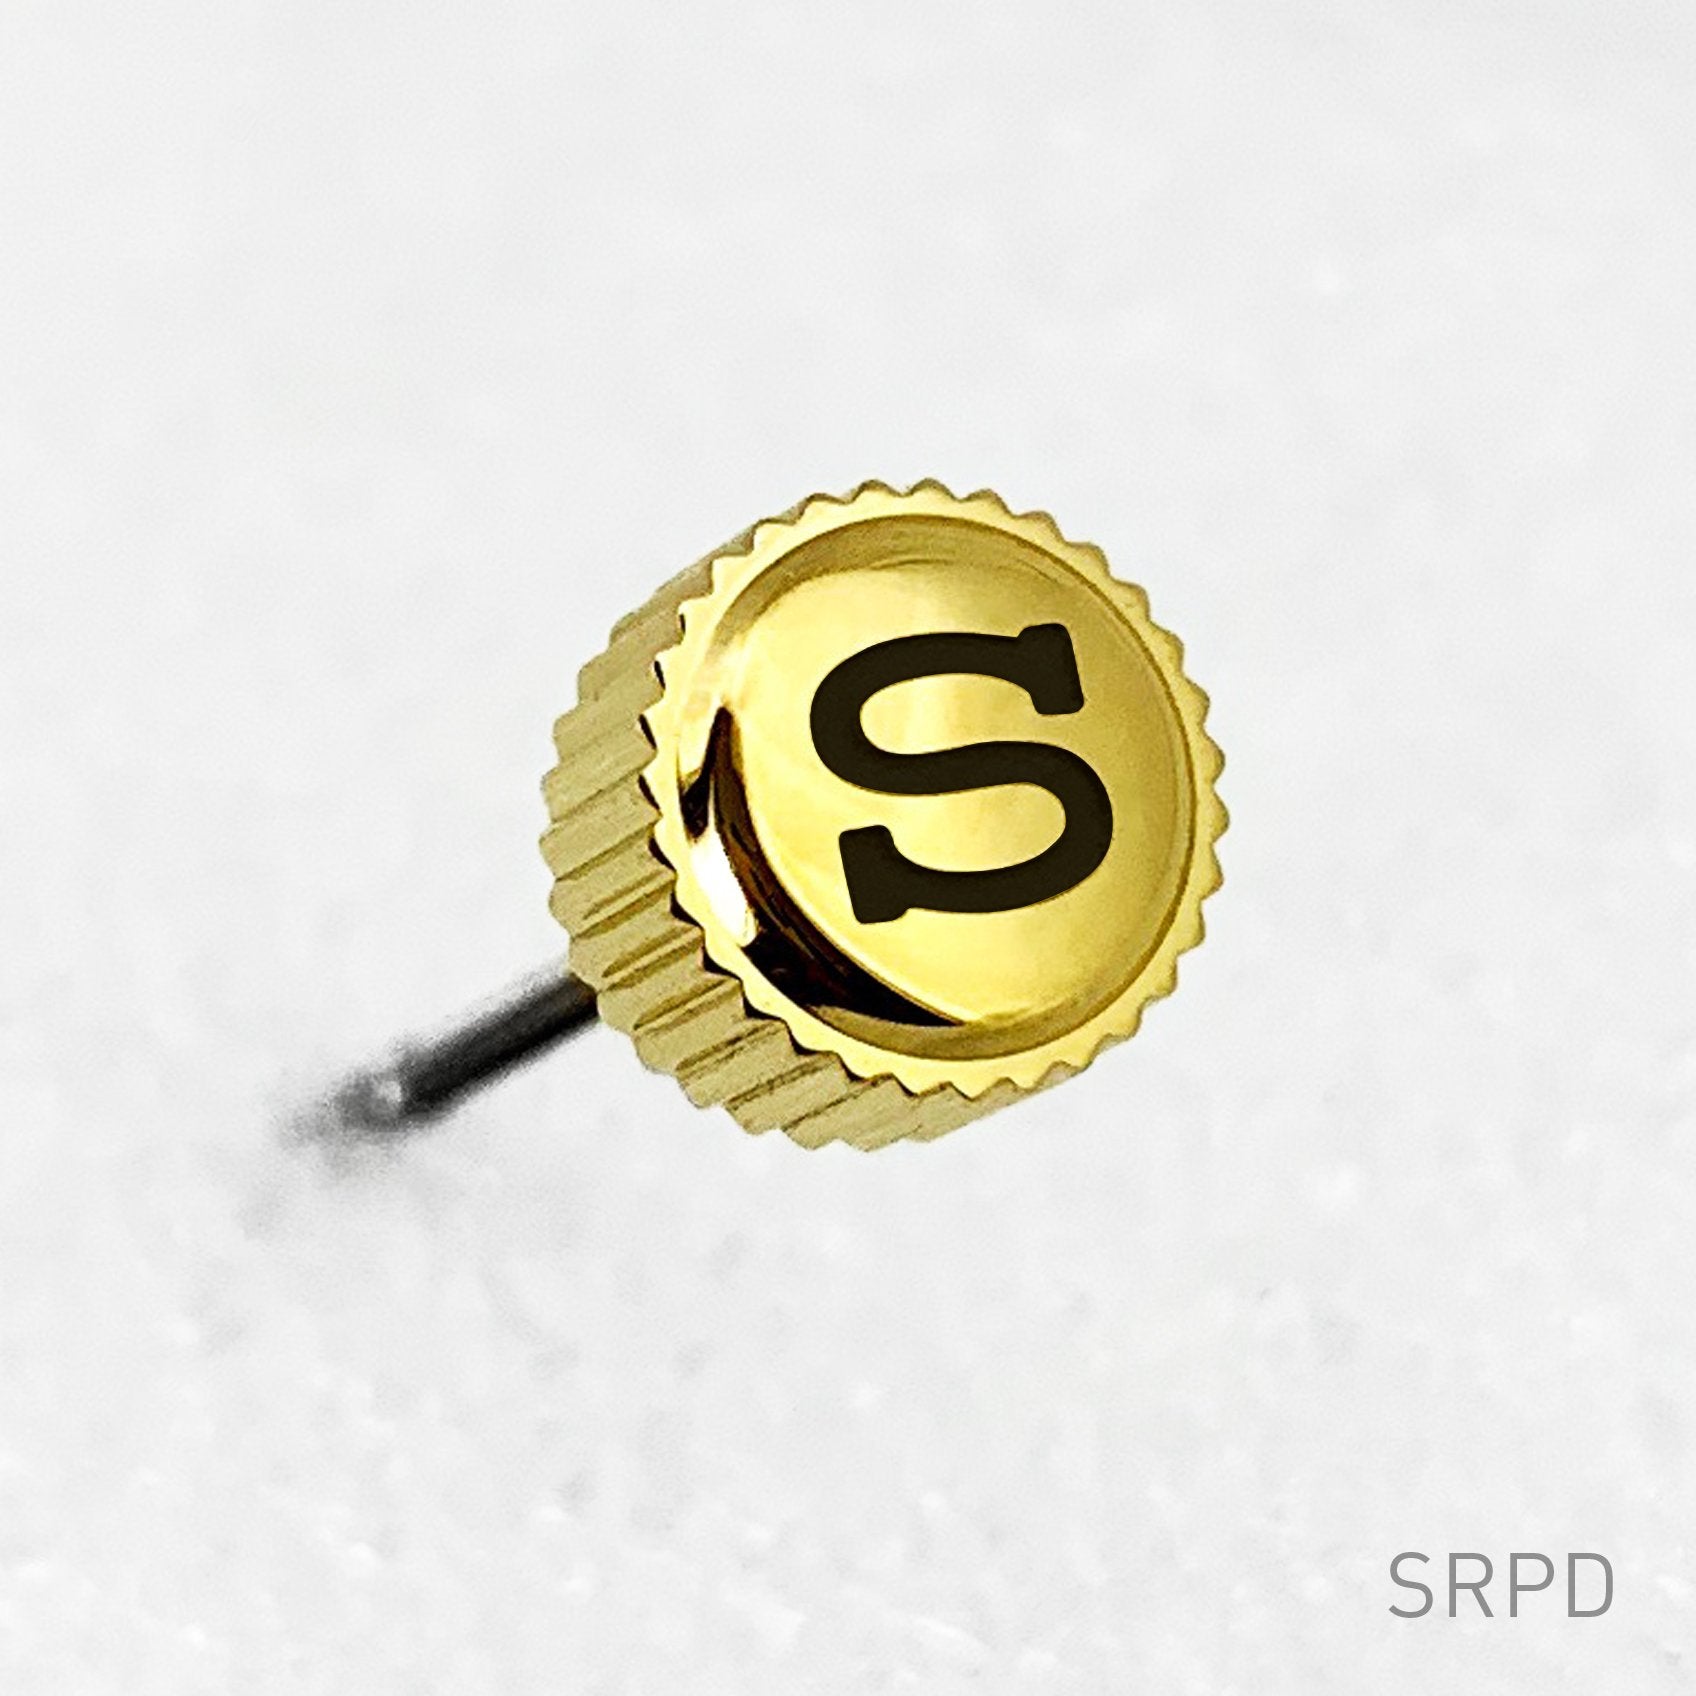 Crown - SRPD - Polished PVD Gold - Black "S"